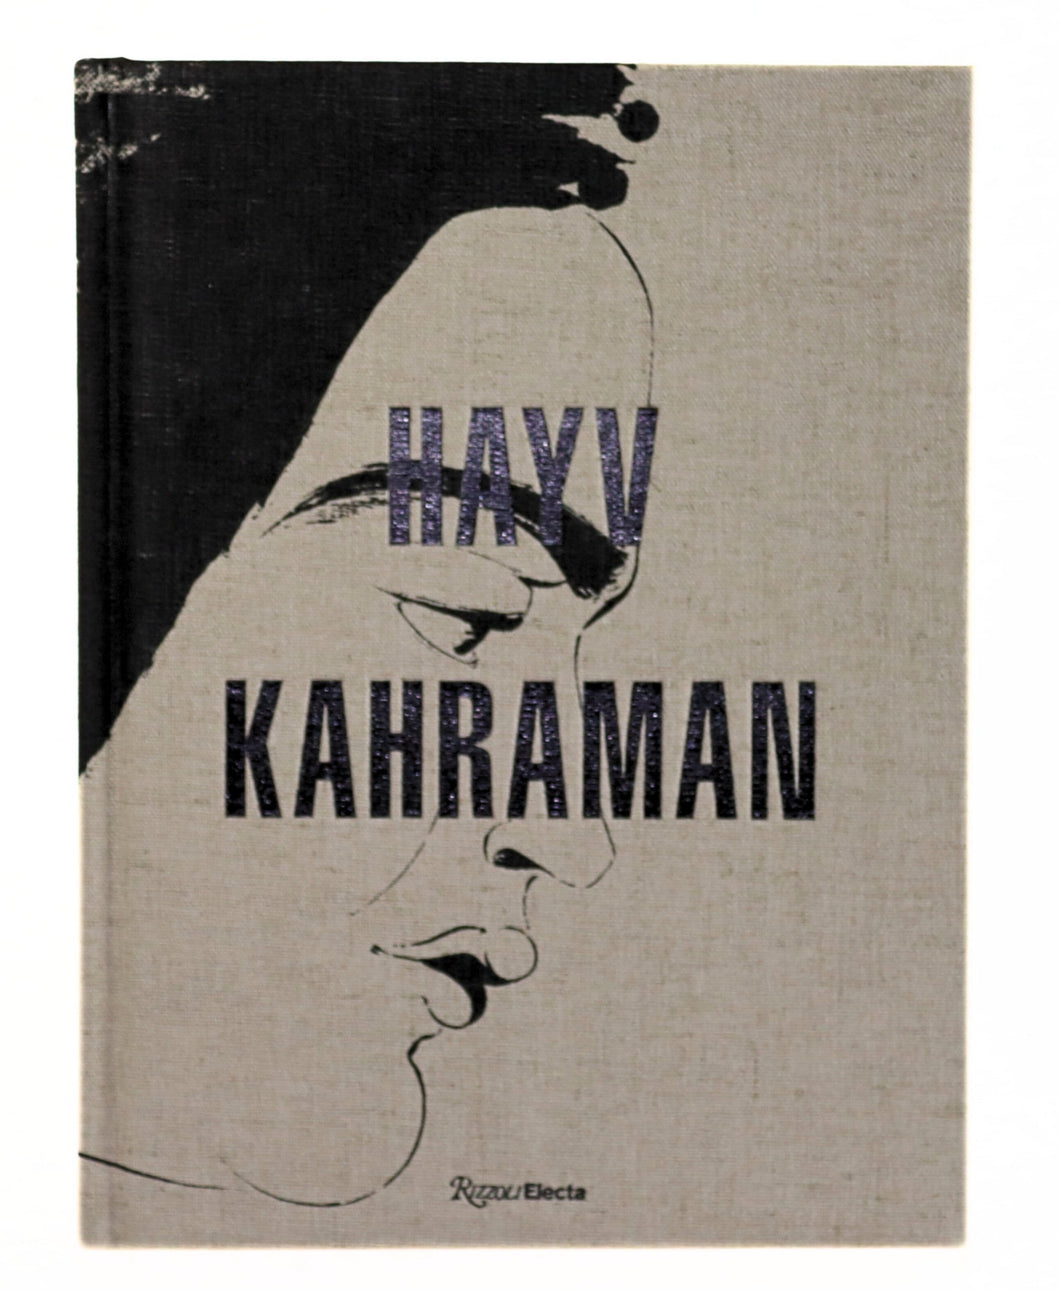 Hayv Kahraman, Monograph